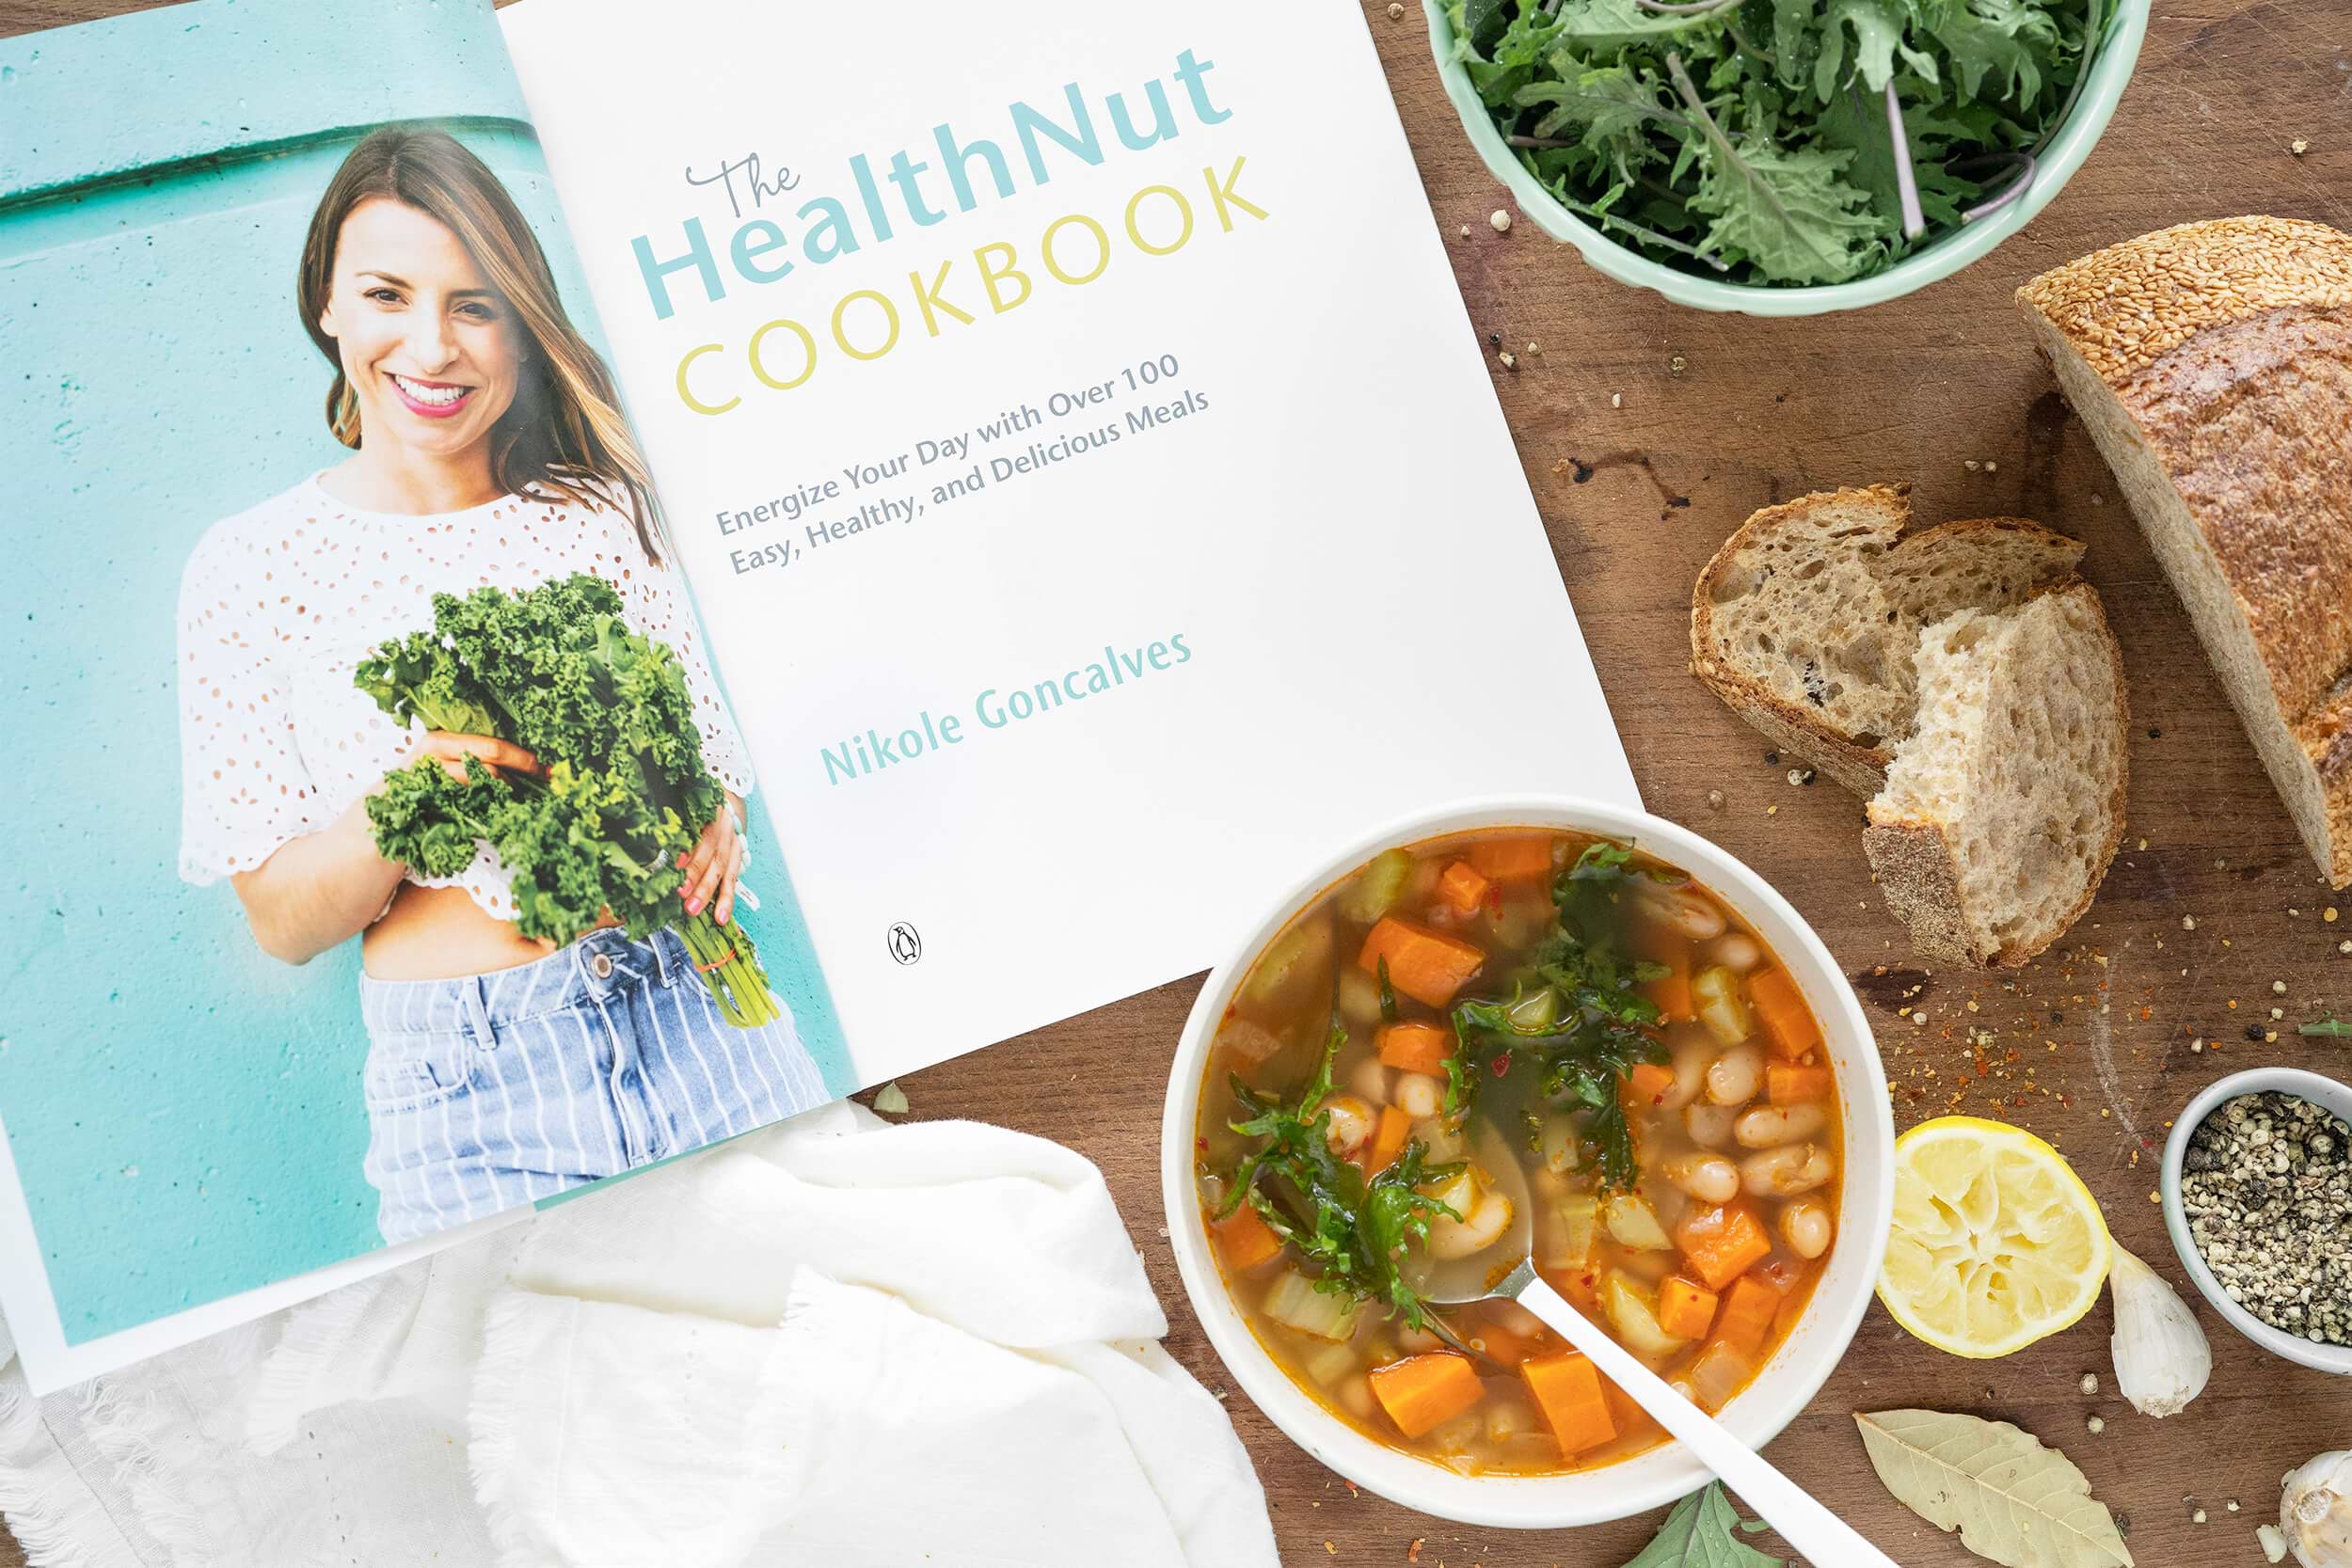 The Healthnut cookbook